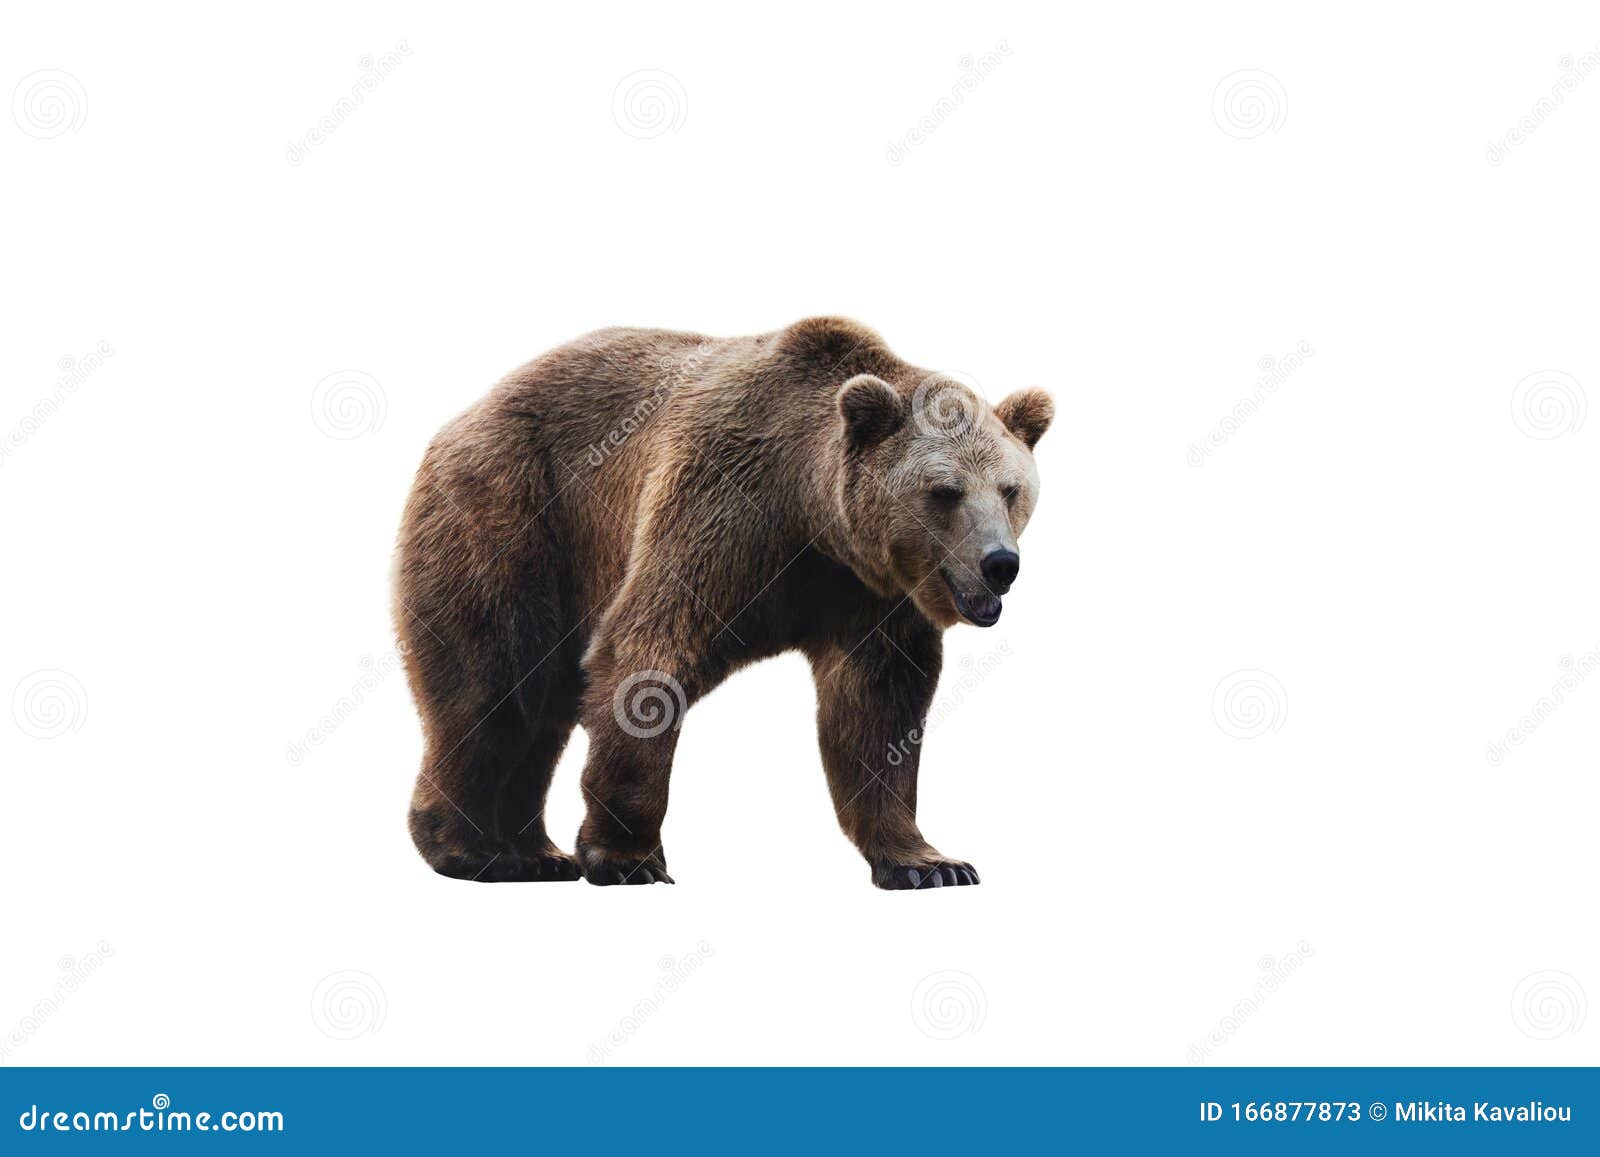 big brown bear  on white background.